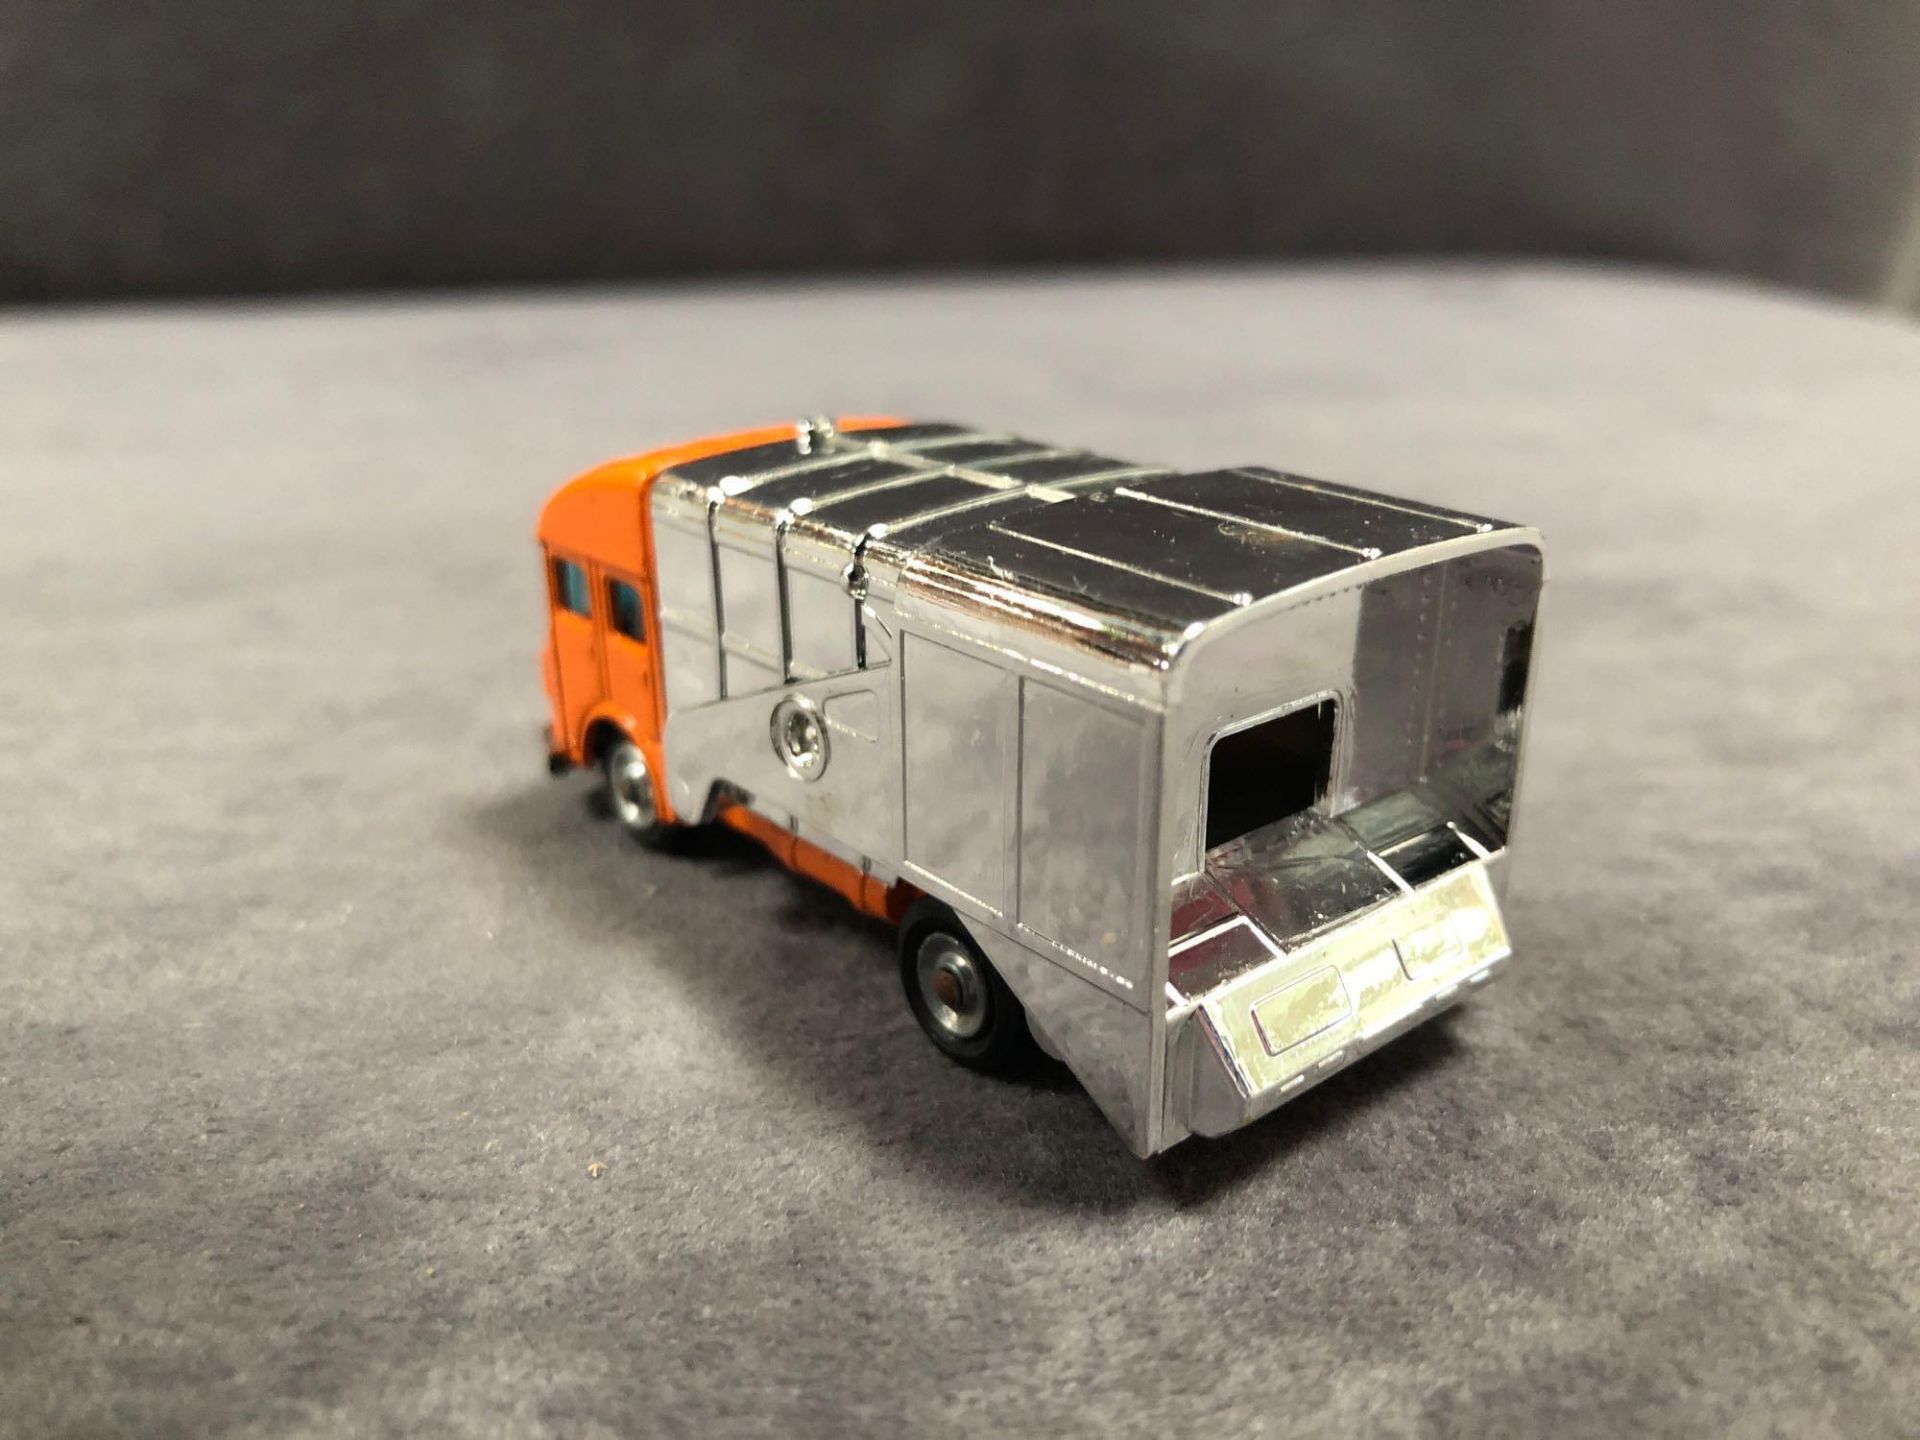 Mint Rarer Colour Corgi Junior #25 Refuse Van In Orange 'Code 2' Manufactured Box - Image 3 of 3